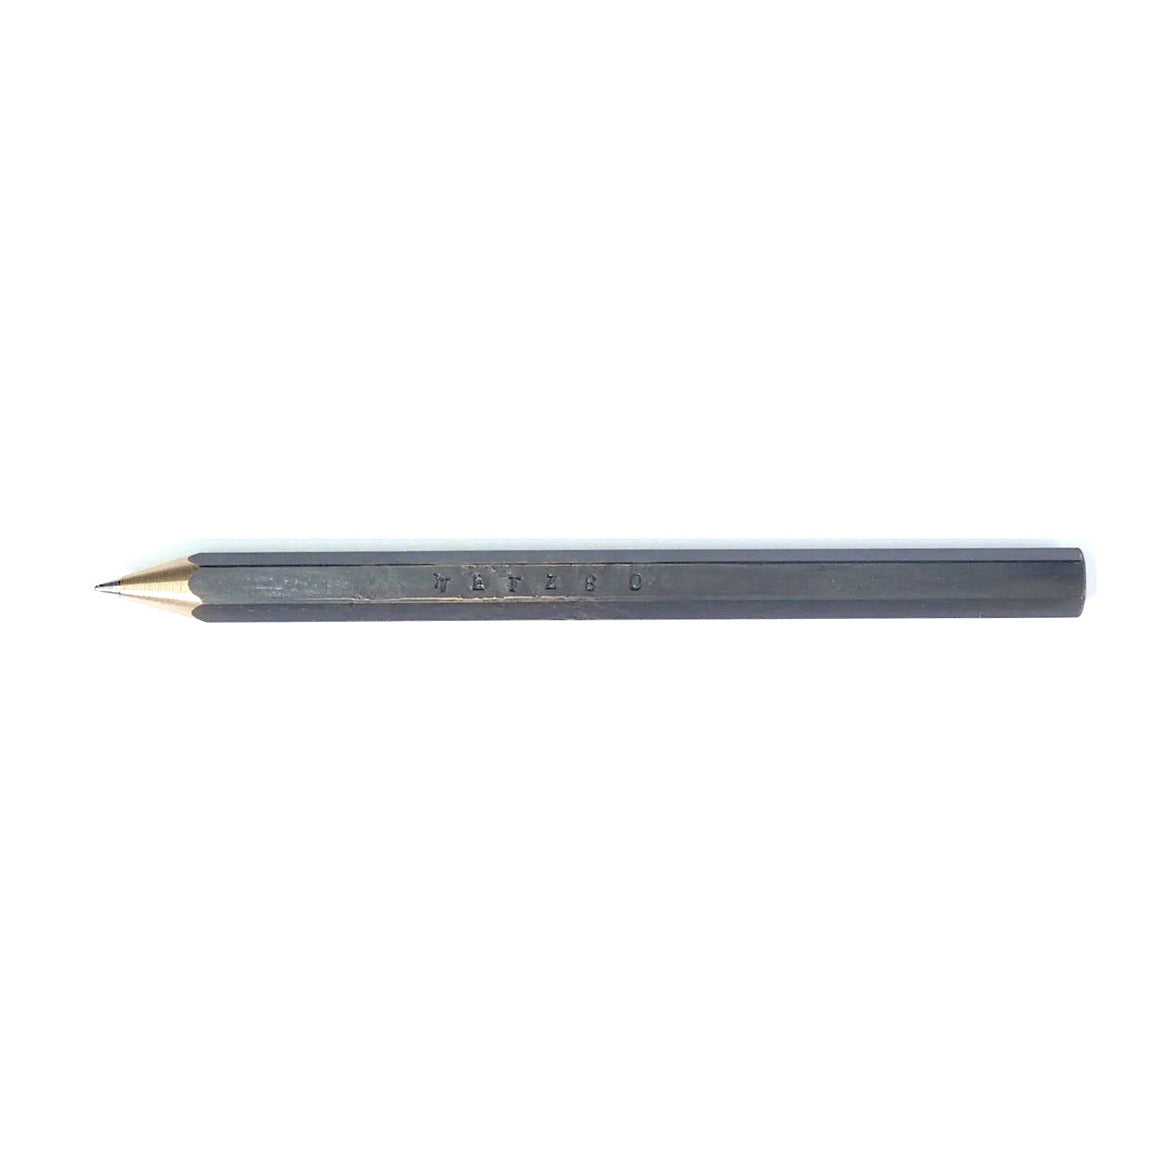 Kugelschreiber Chibien 7 Messing schwarz | Tetzbo | Handmade in Japan